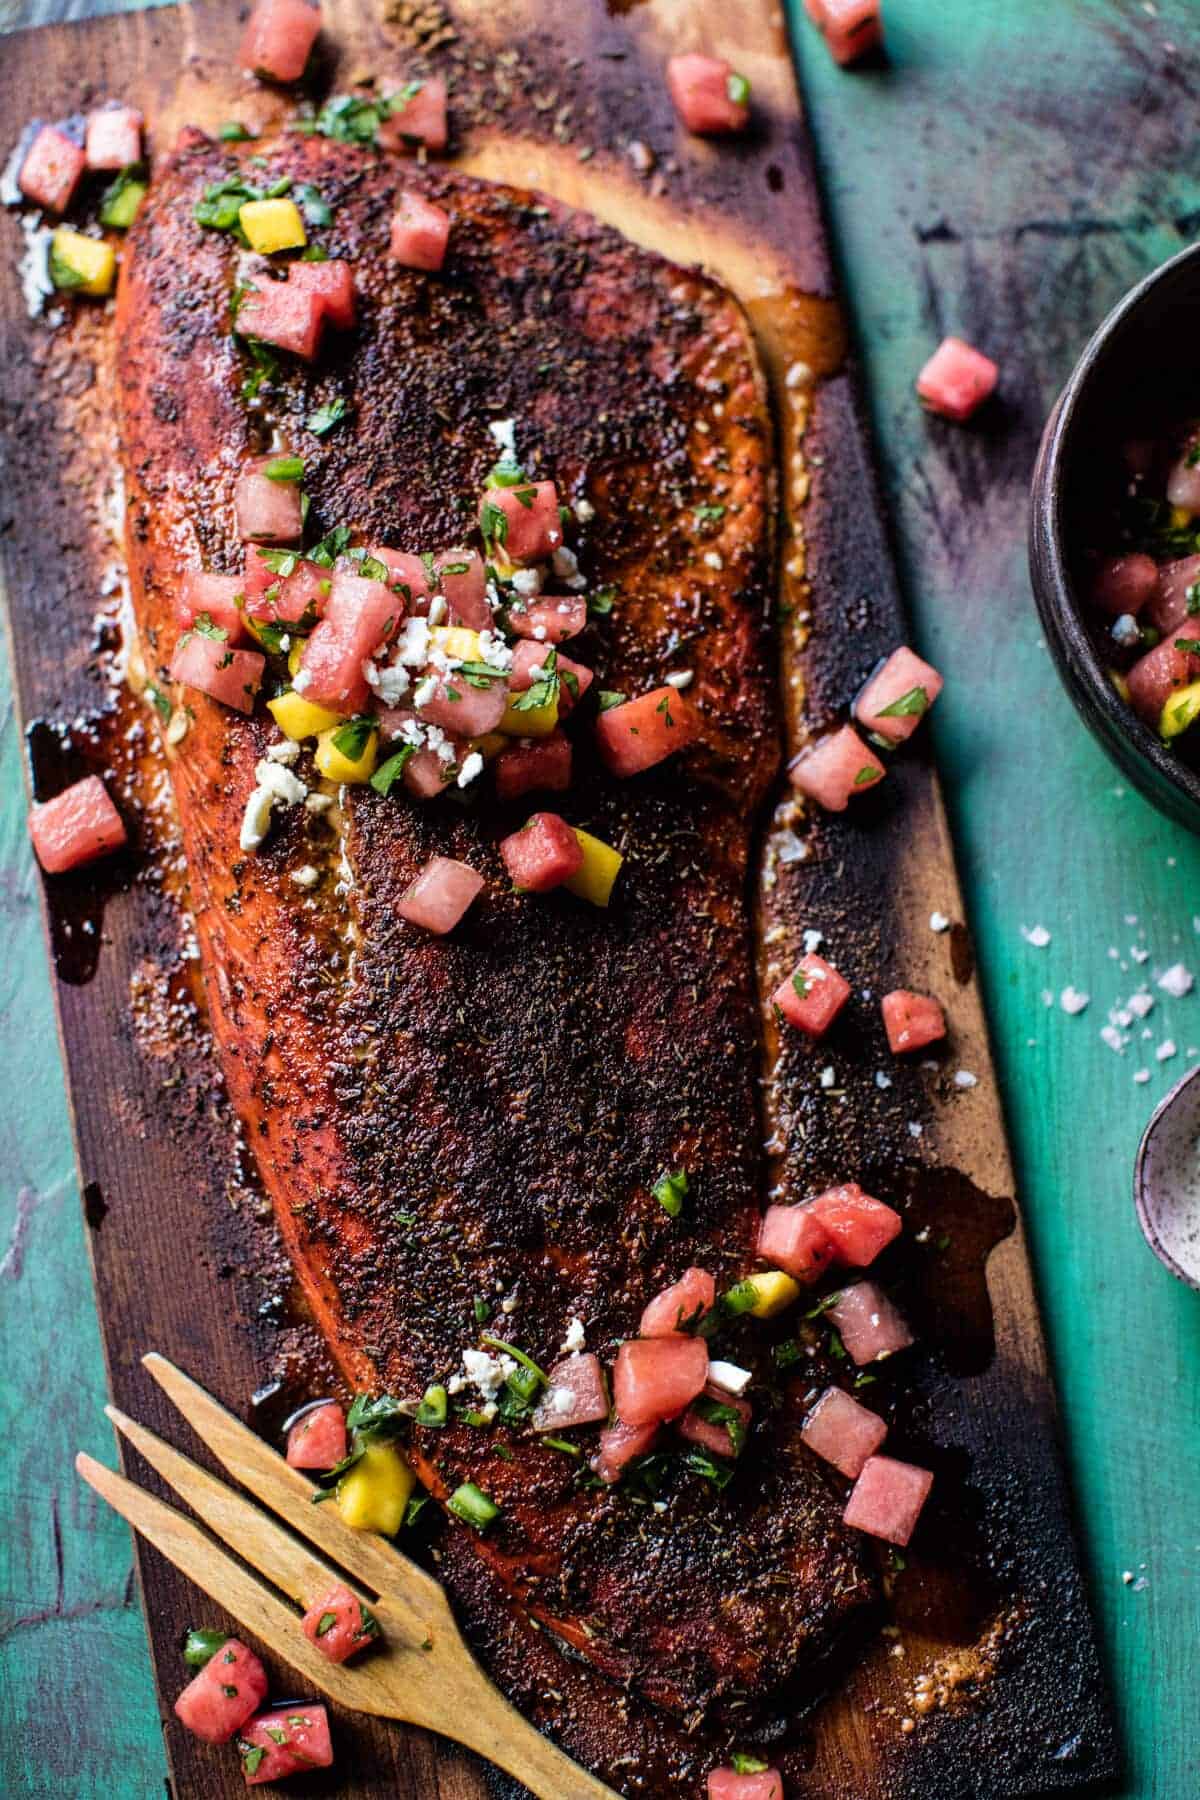 Cedar Plank Salmon with Watermelon Feta Salsa | halfbakedharvest.com @hbharvest